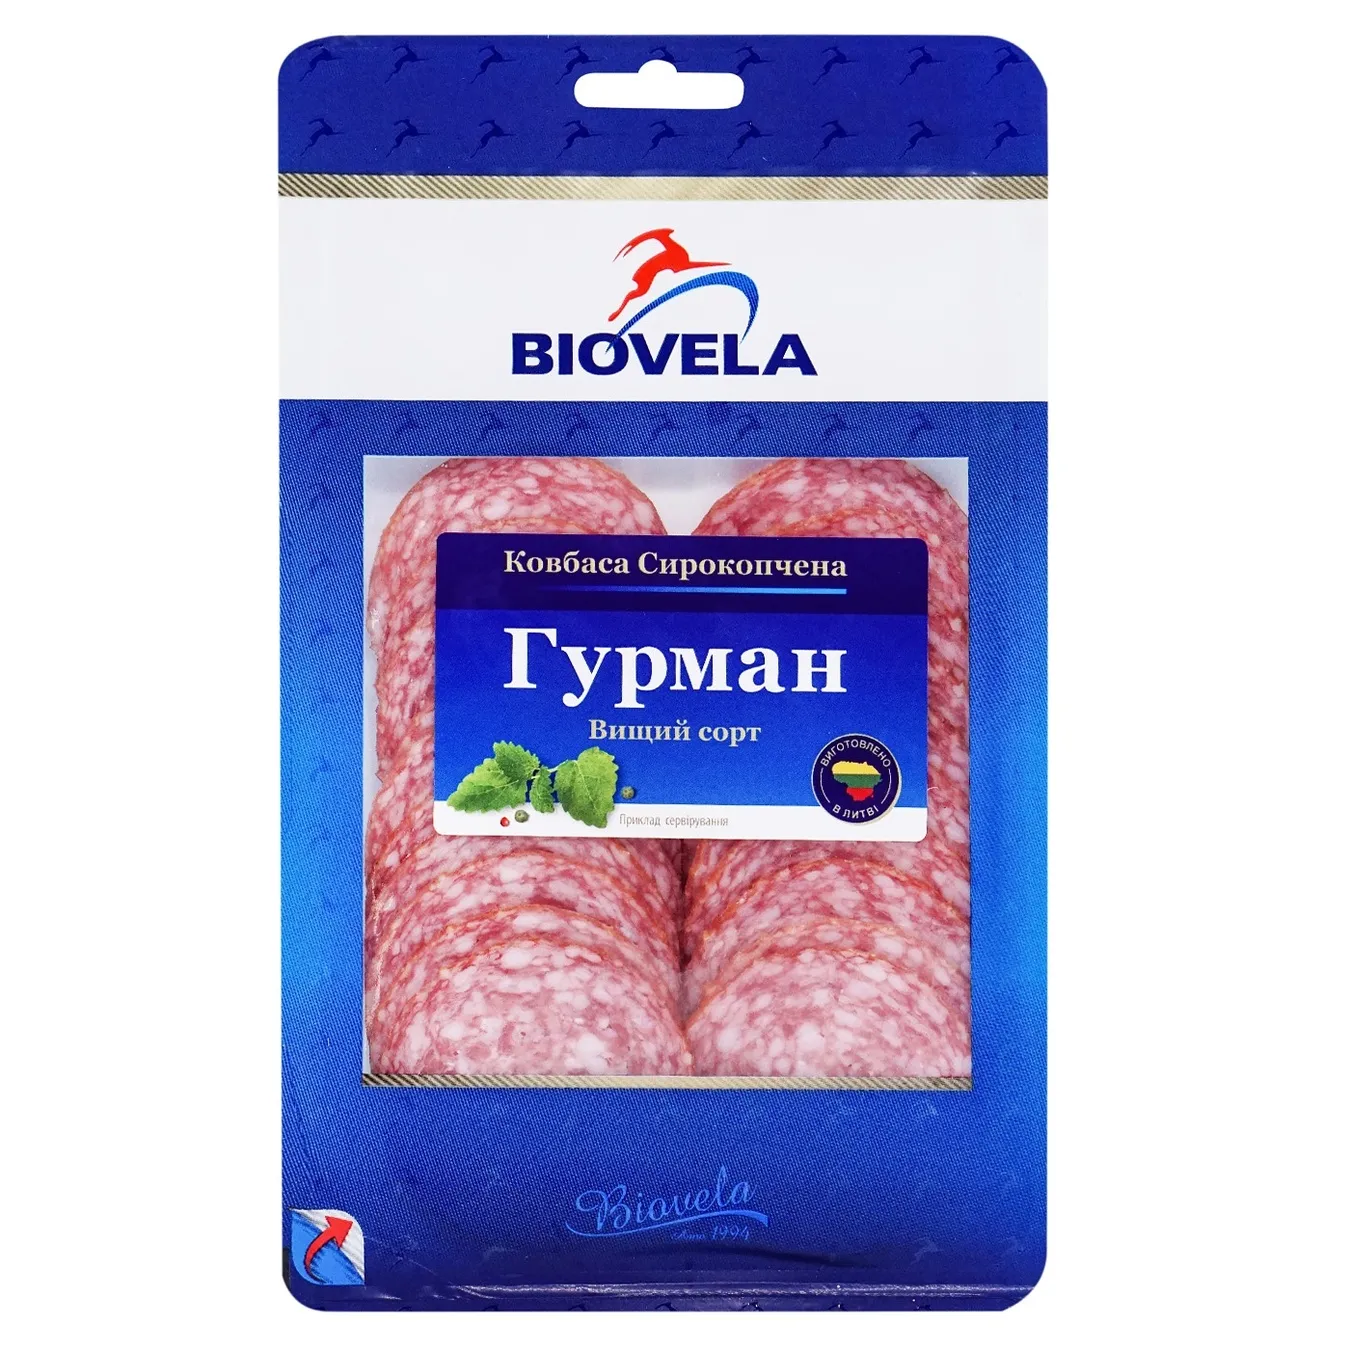 Biovela Gourmet raw-smoked sausage cut 90g